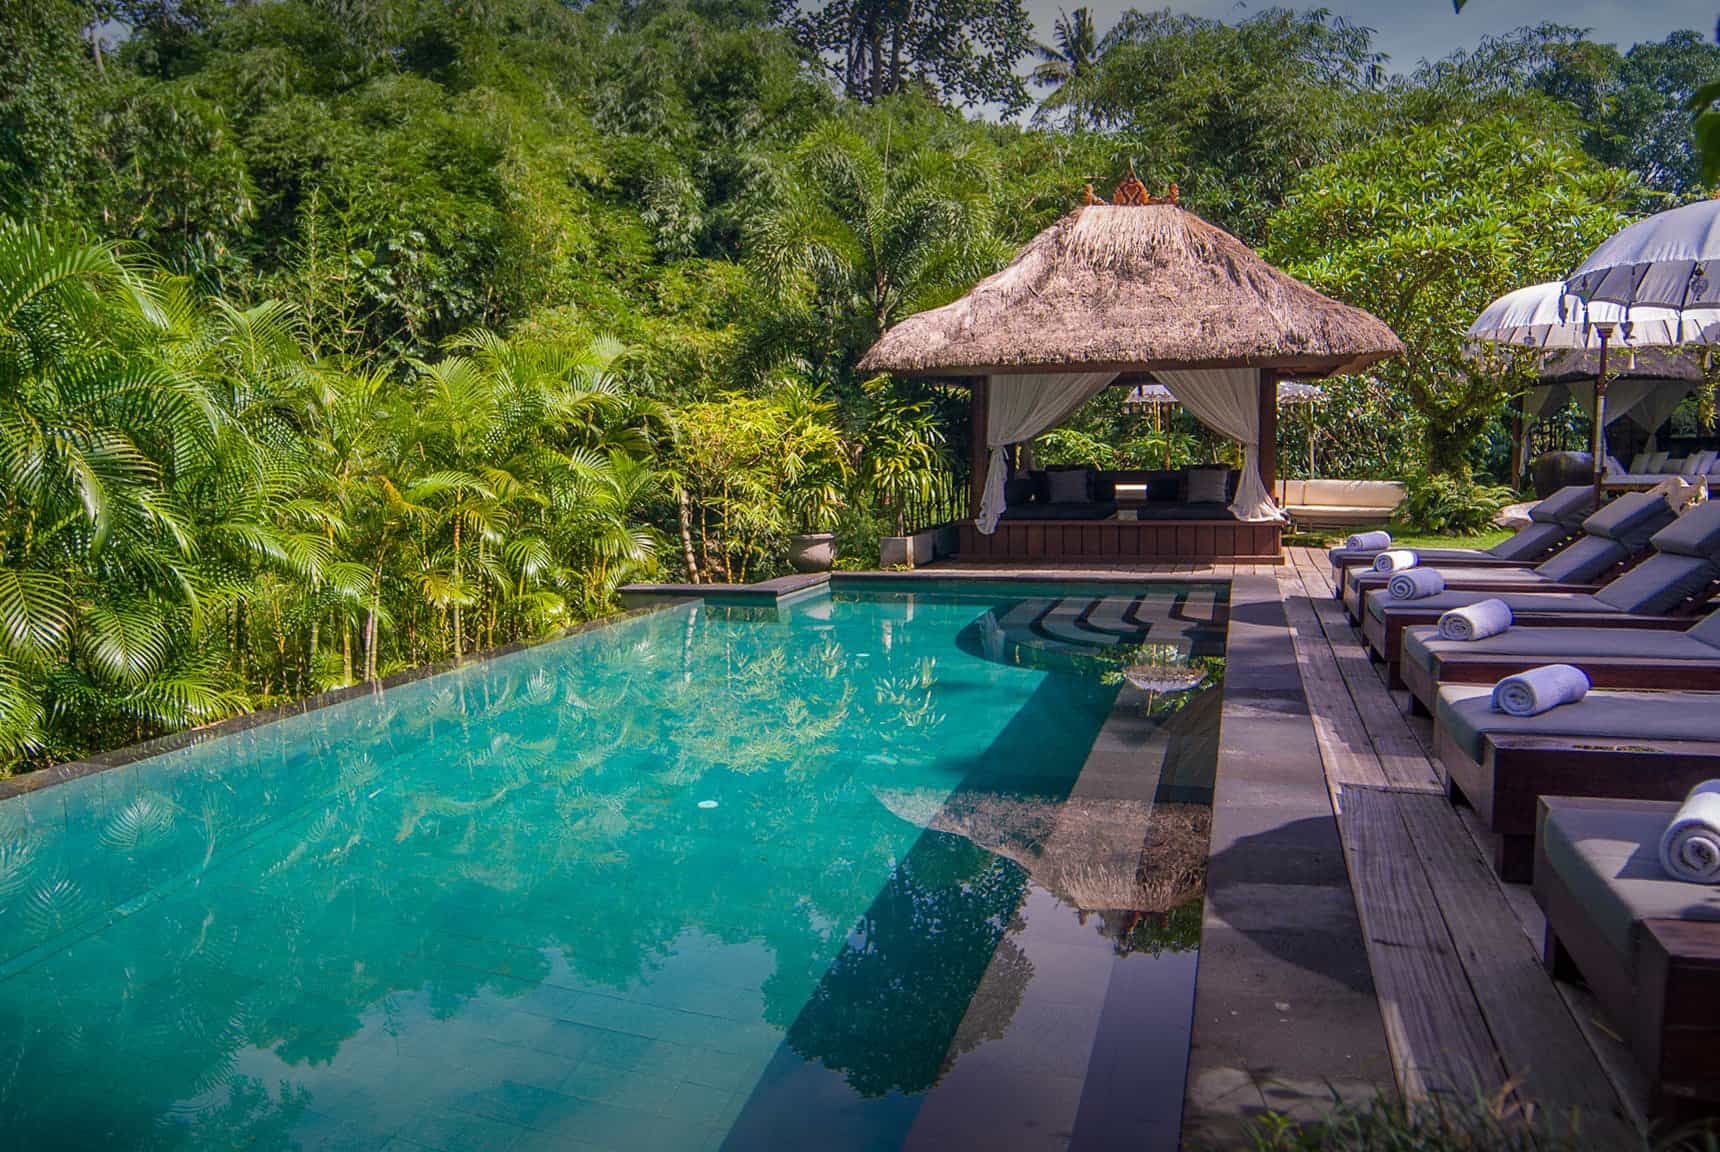 Villa Maya - Canggu, Bali Indonesia (Bali villa photography by master photographer Rick Carmichael of LuxViz)